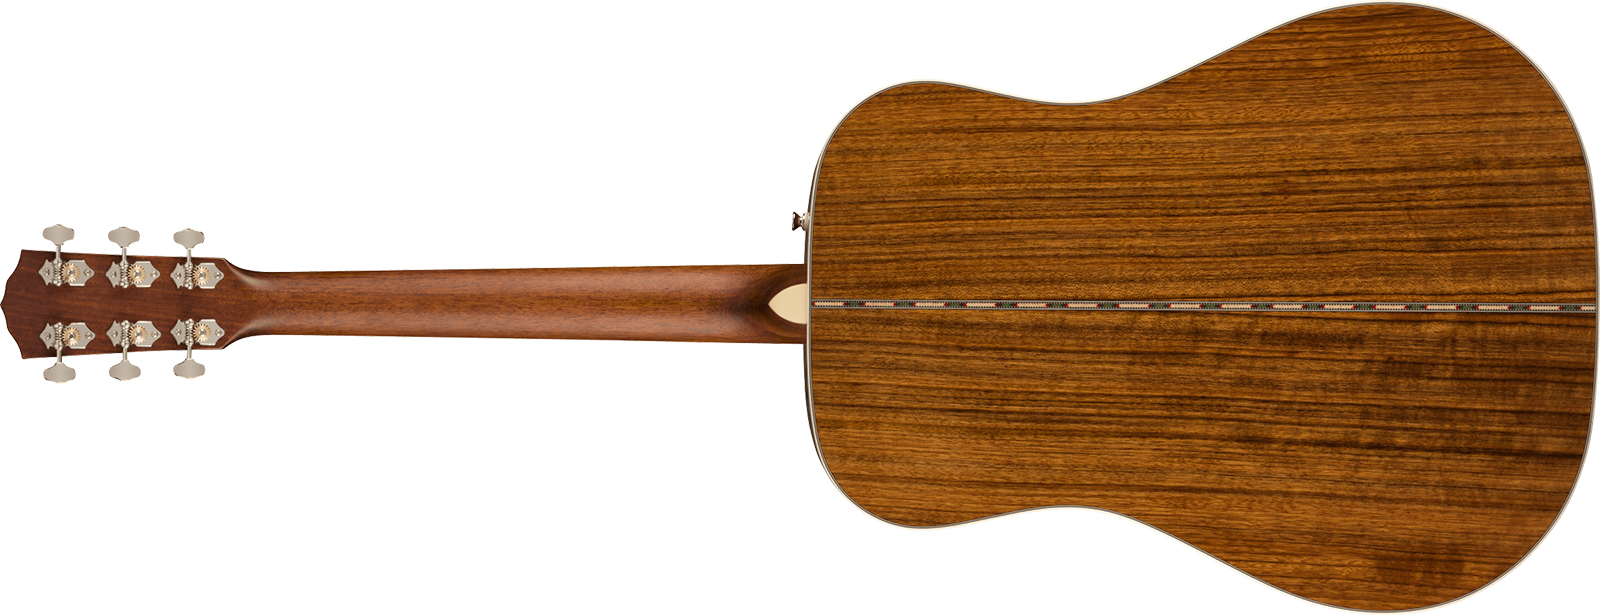 Fender Pd-220e Paramount Fsr Ltd Dreadnought Epicea Ovangkol Ova - Aged Natural - Elektroakustische Gitarre - Variation 1